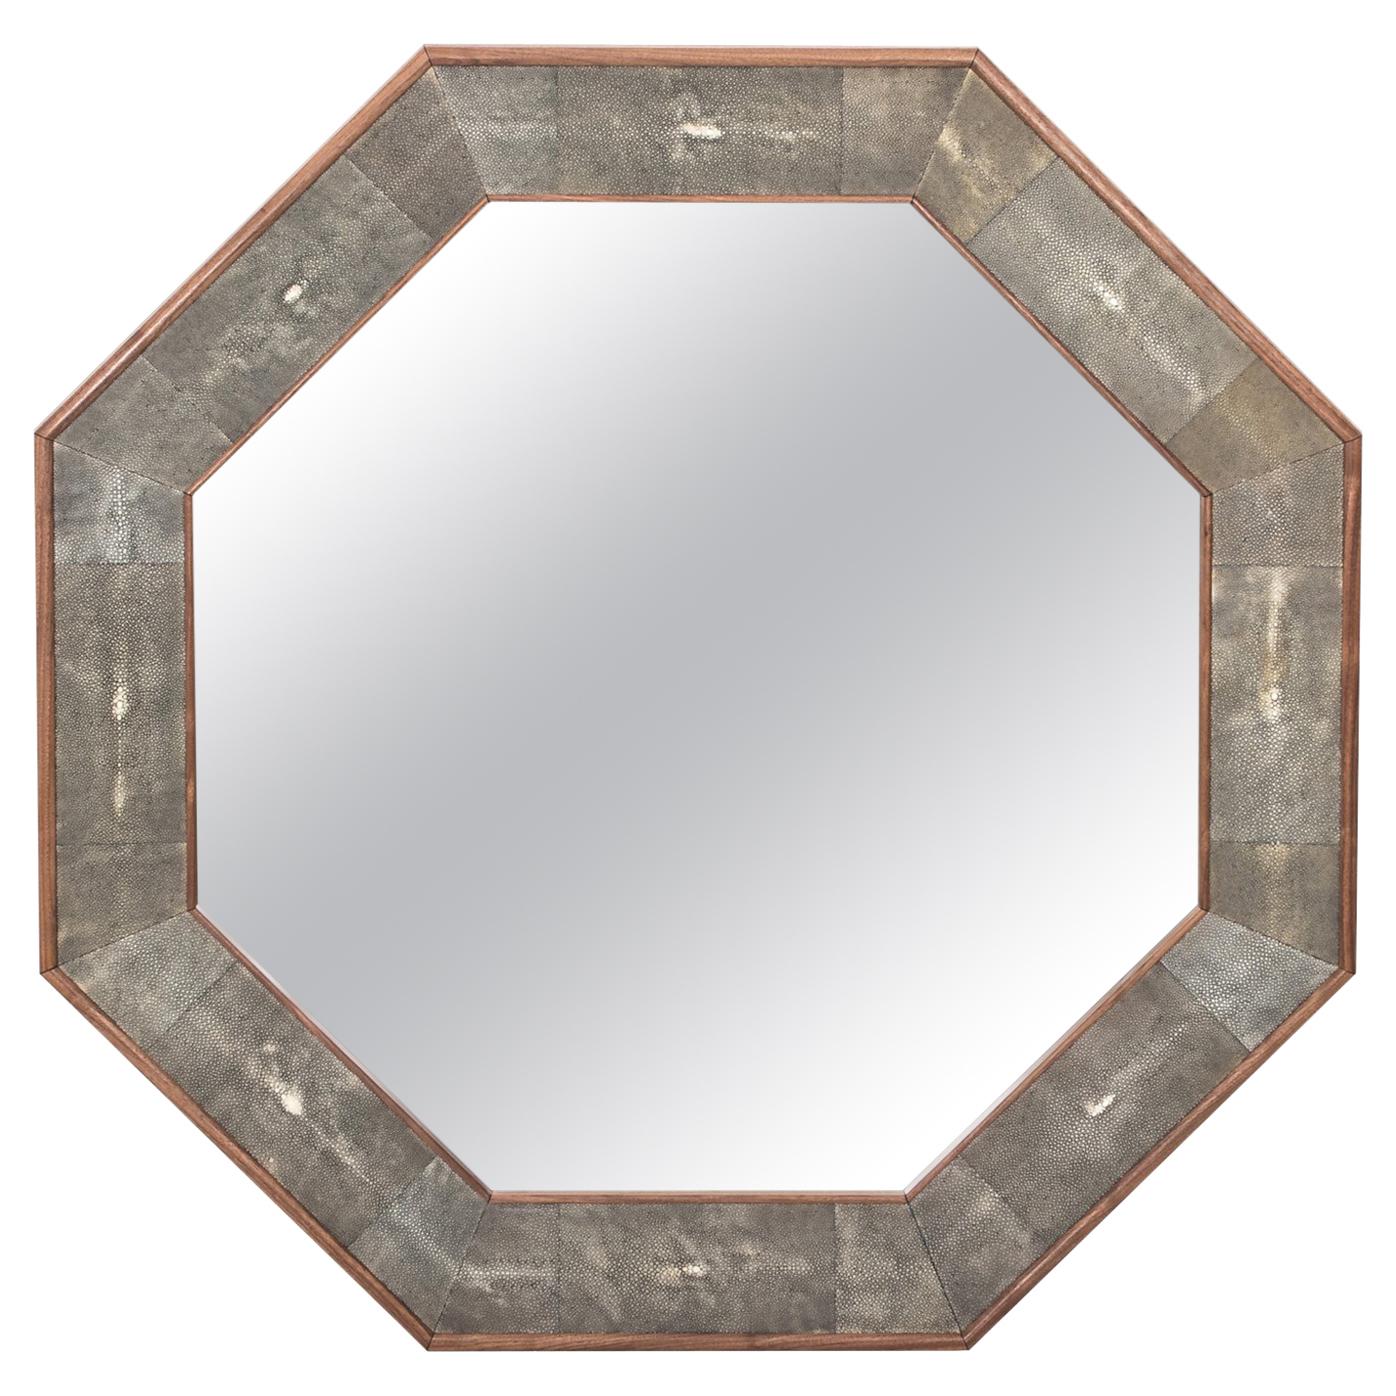 Octagonal Walnut and Shagreen Mirror